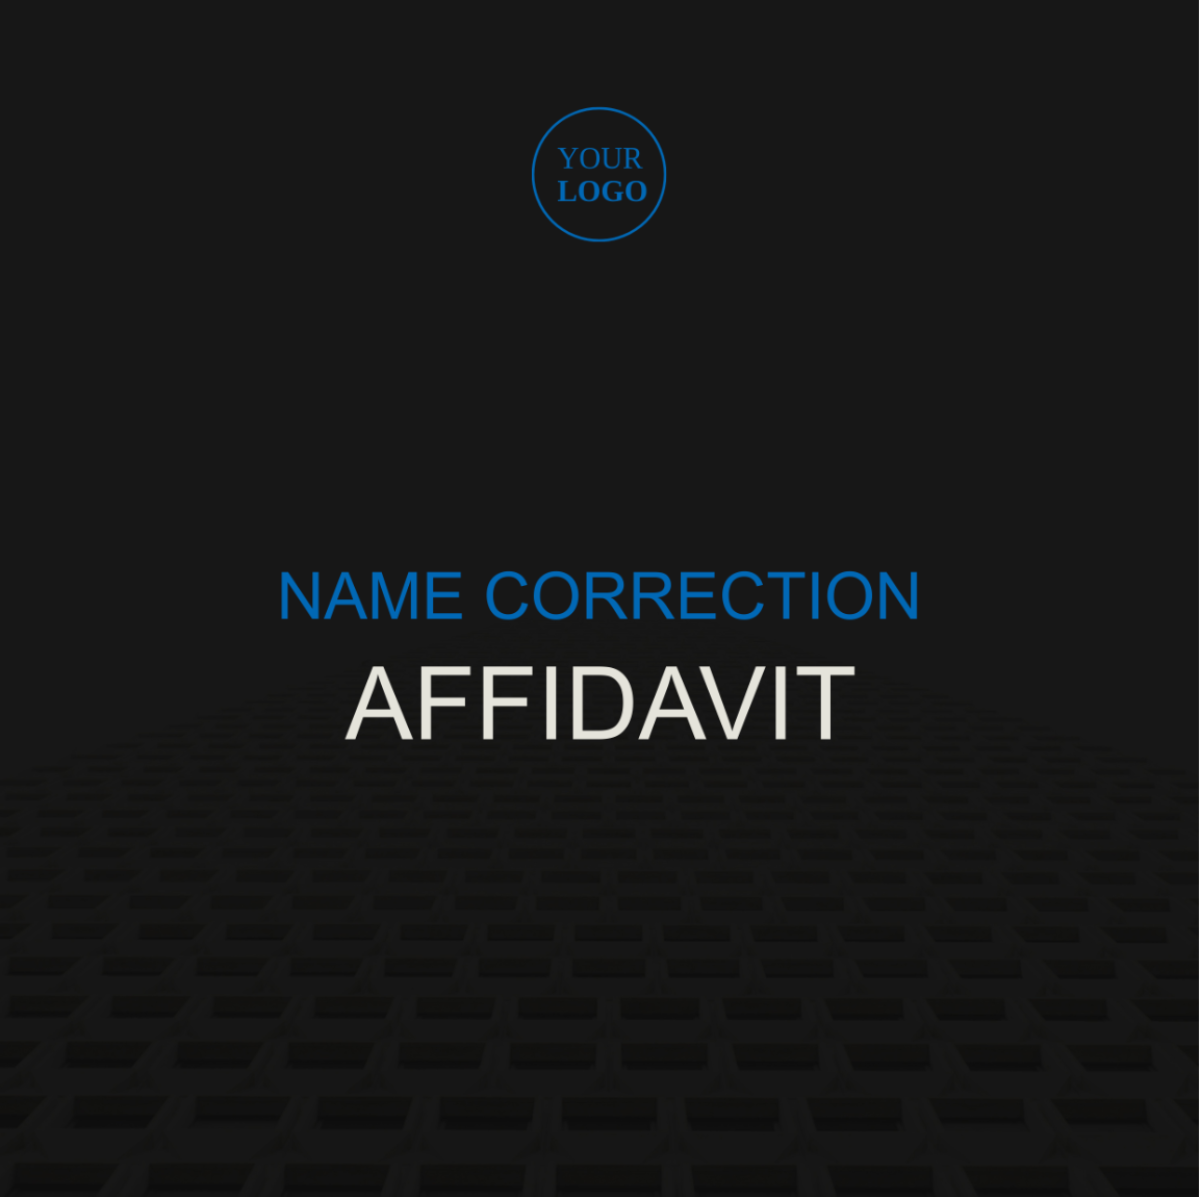 Name Correction Affidavit Template